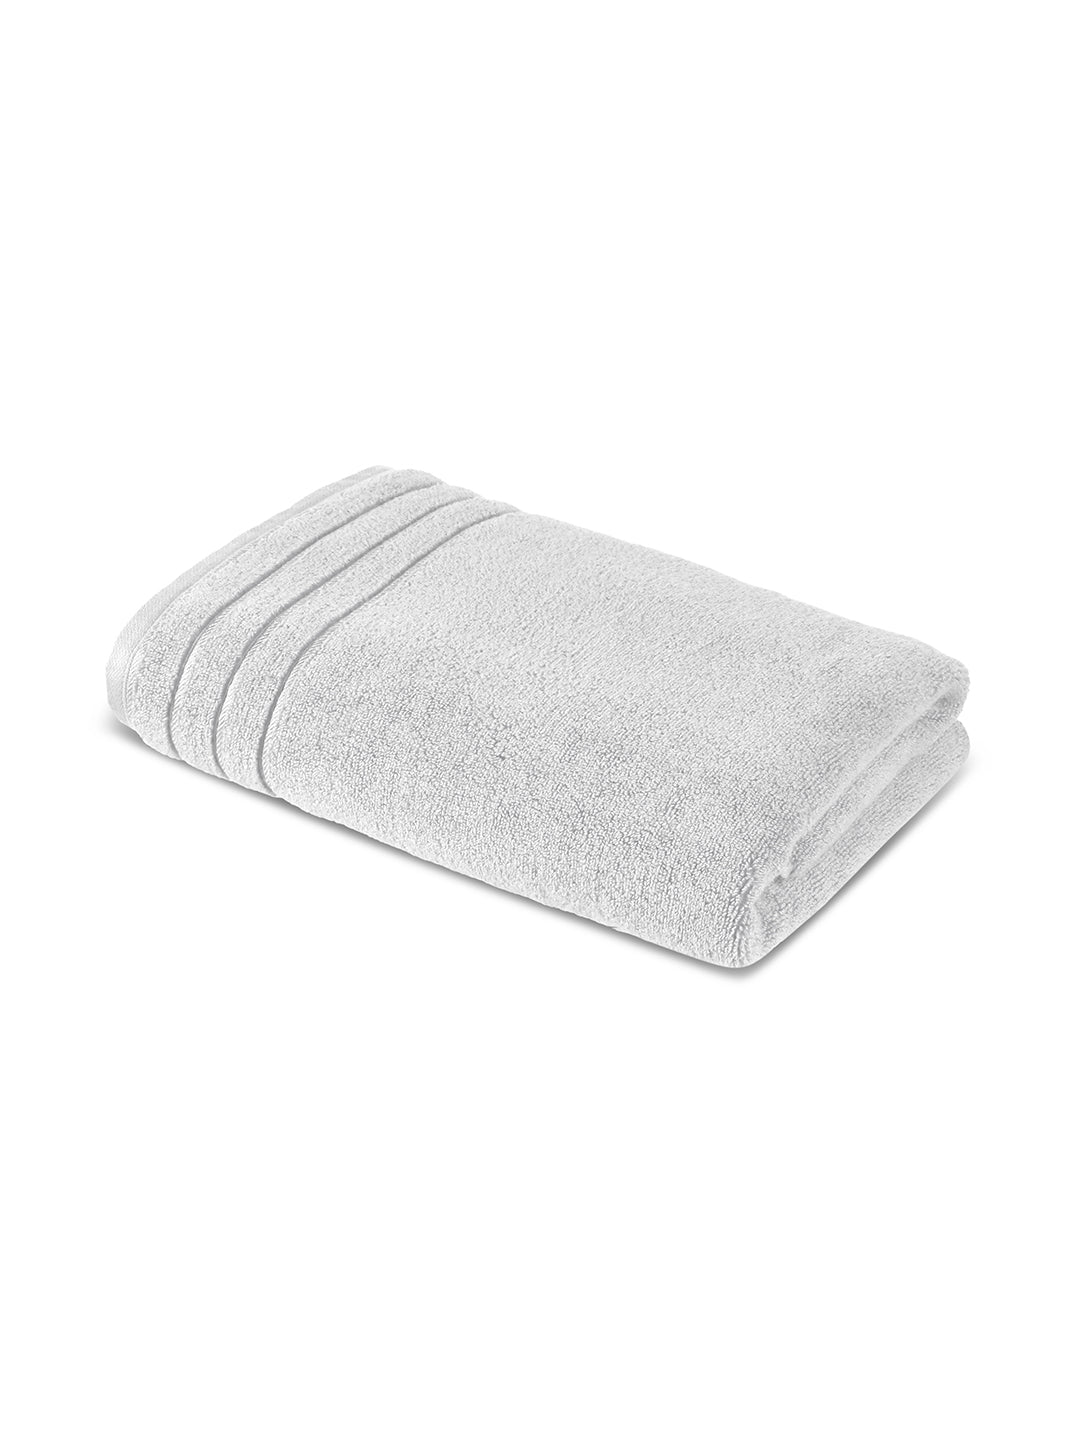 Gold Super Plush Bath Towel